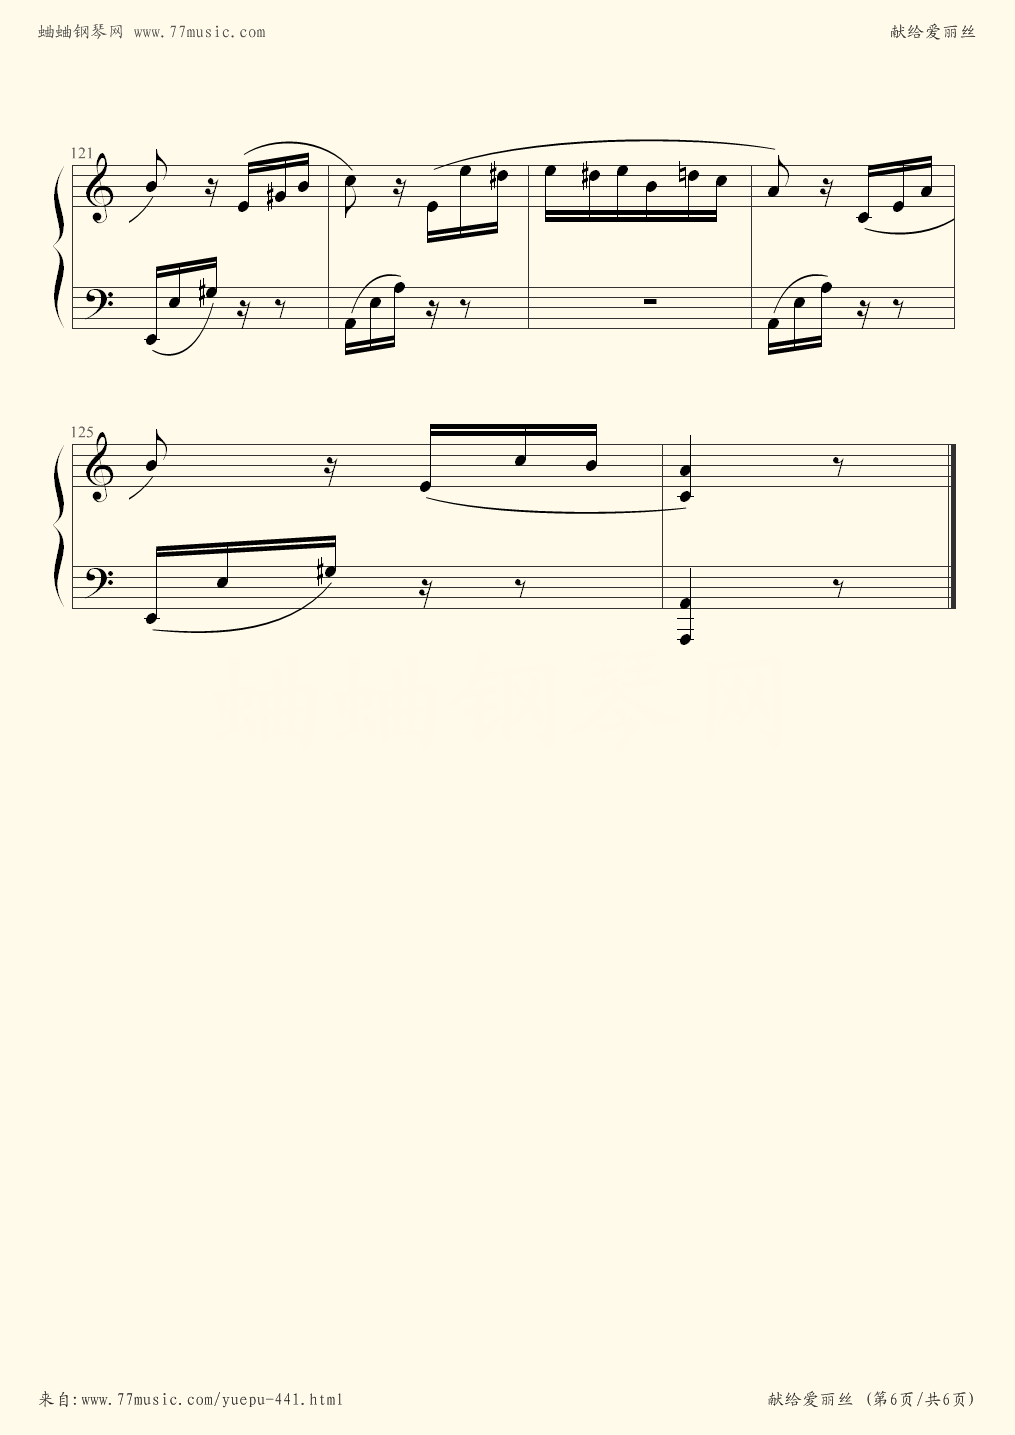 For Elise - Ludwig van Beethoven - Flash Piano Sheet Music Free